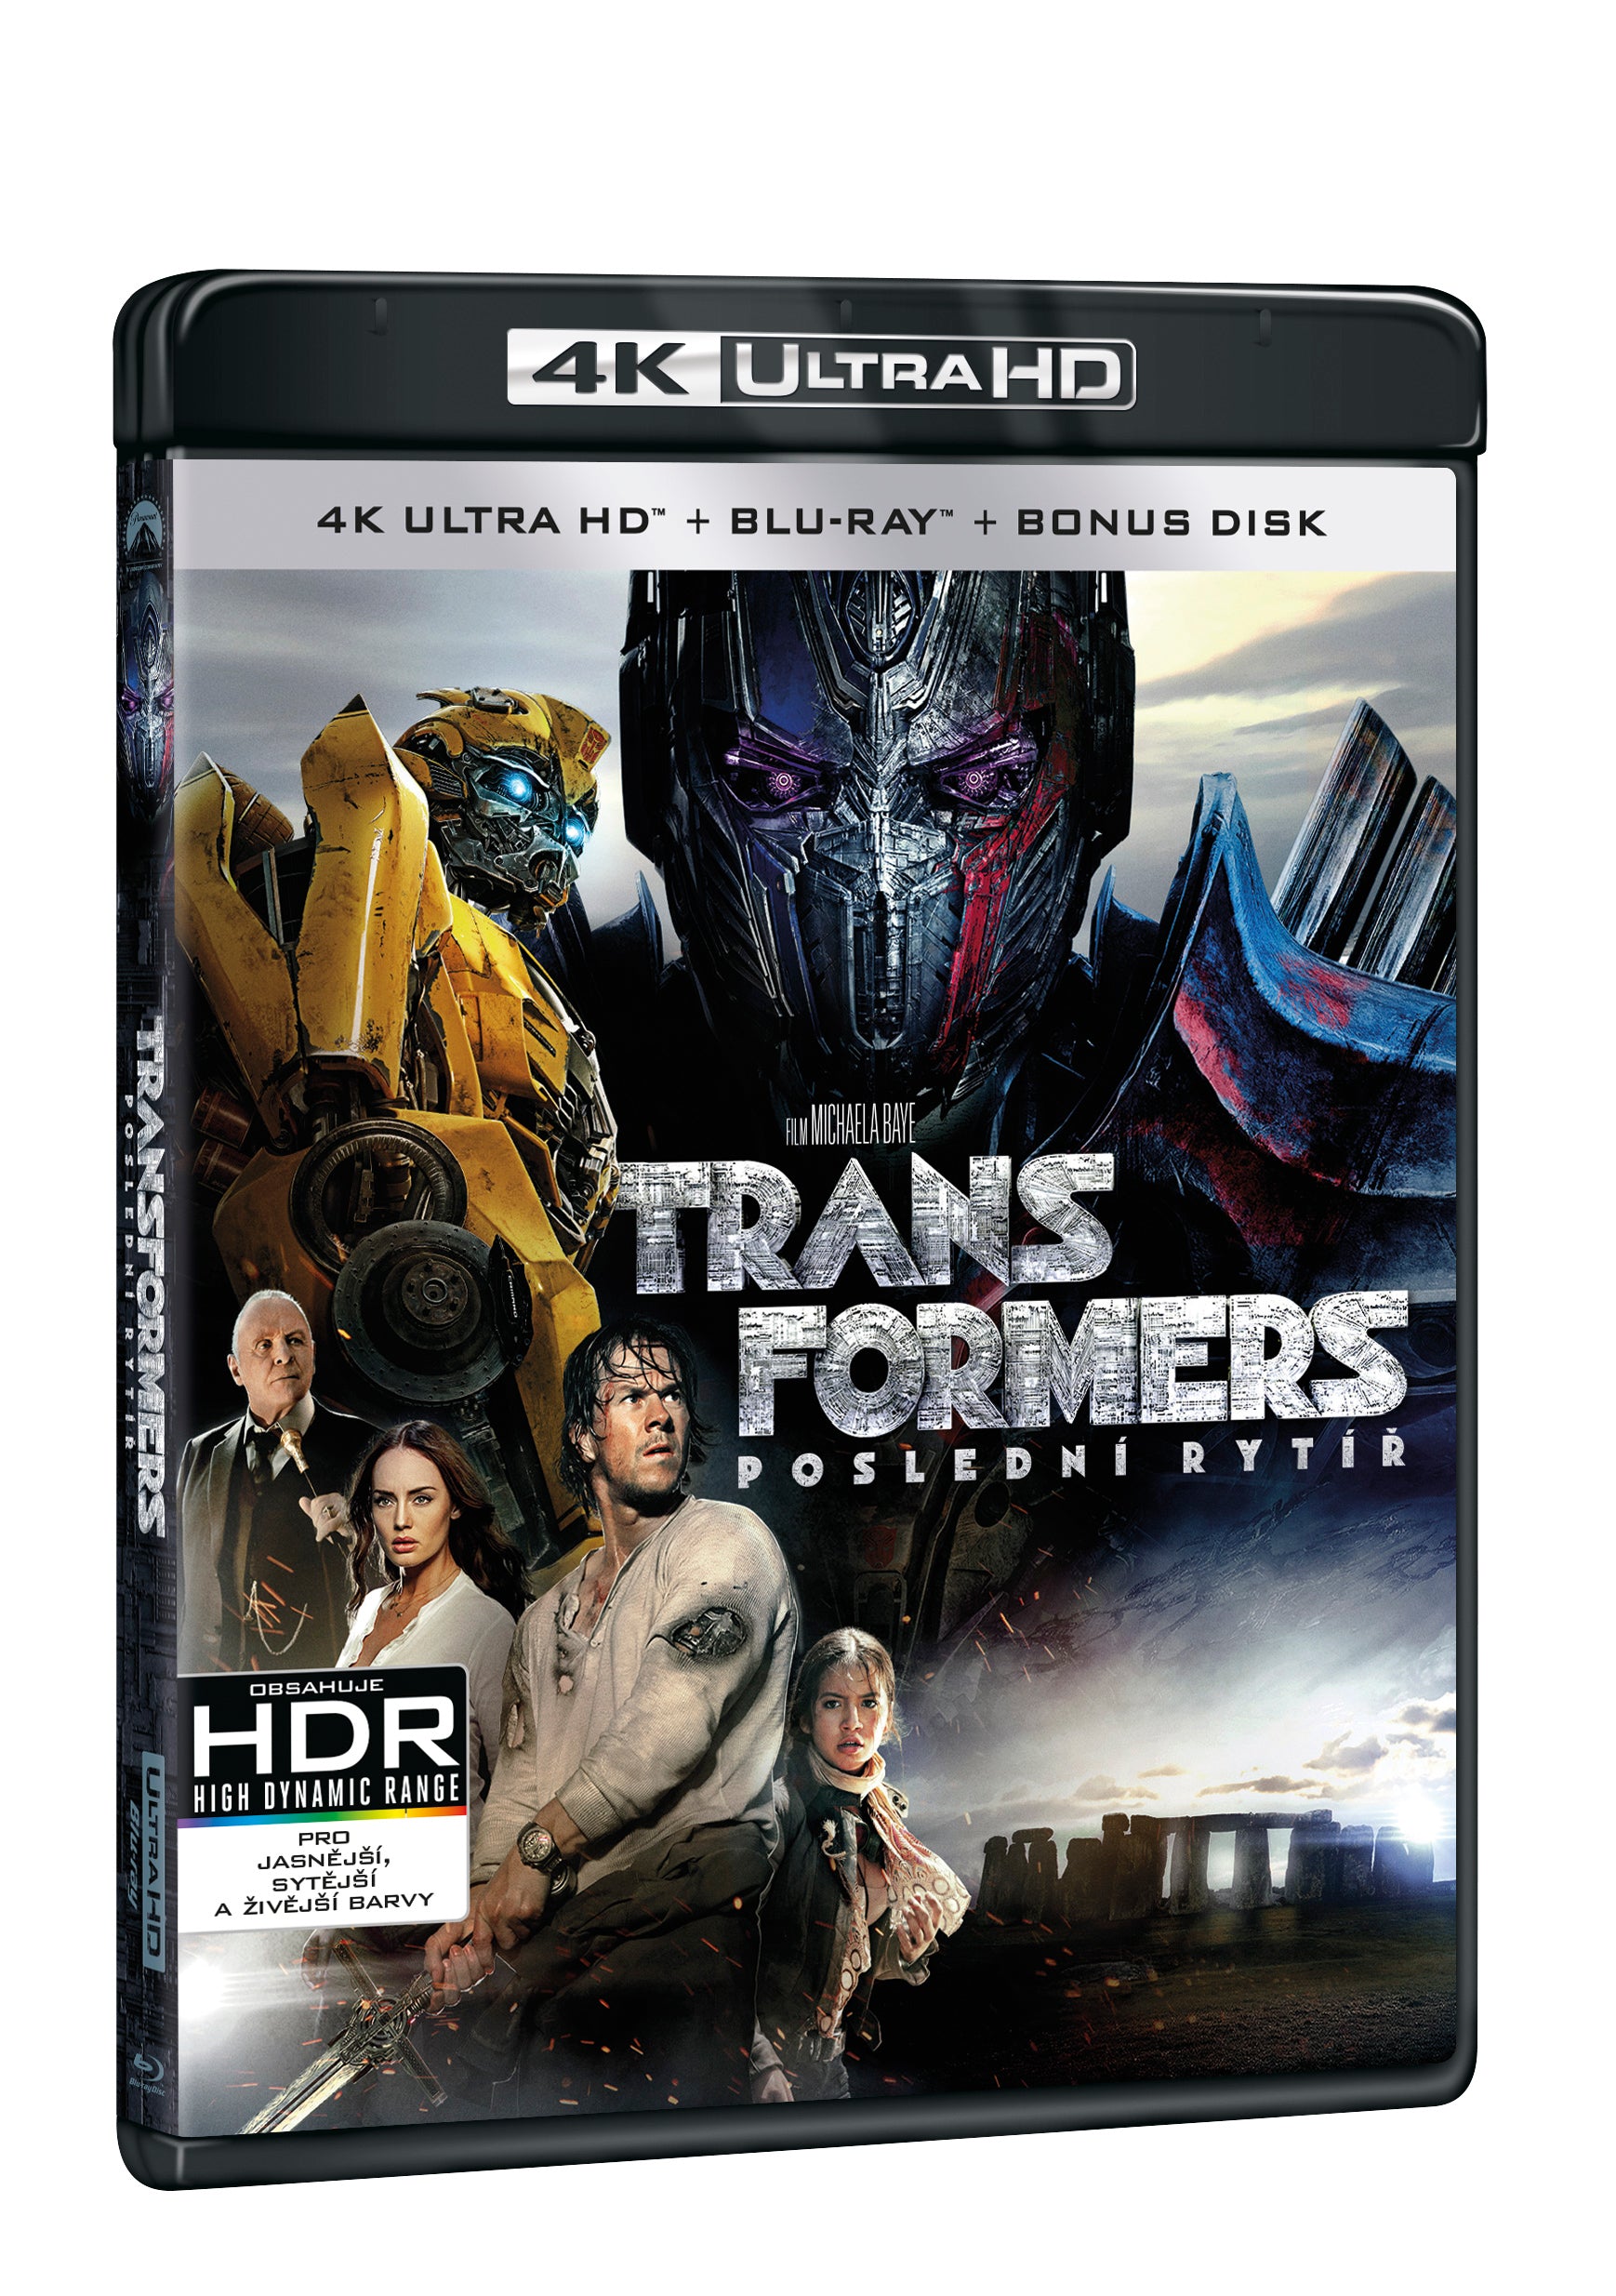 Transformers: Posledni rytir 3BD (UHD+BD+bonus disk) / Transformers: The Last Knight - Czech version